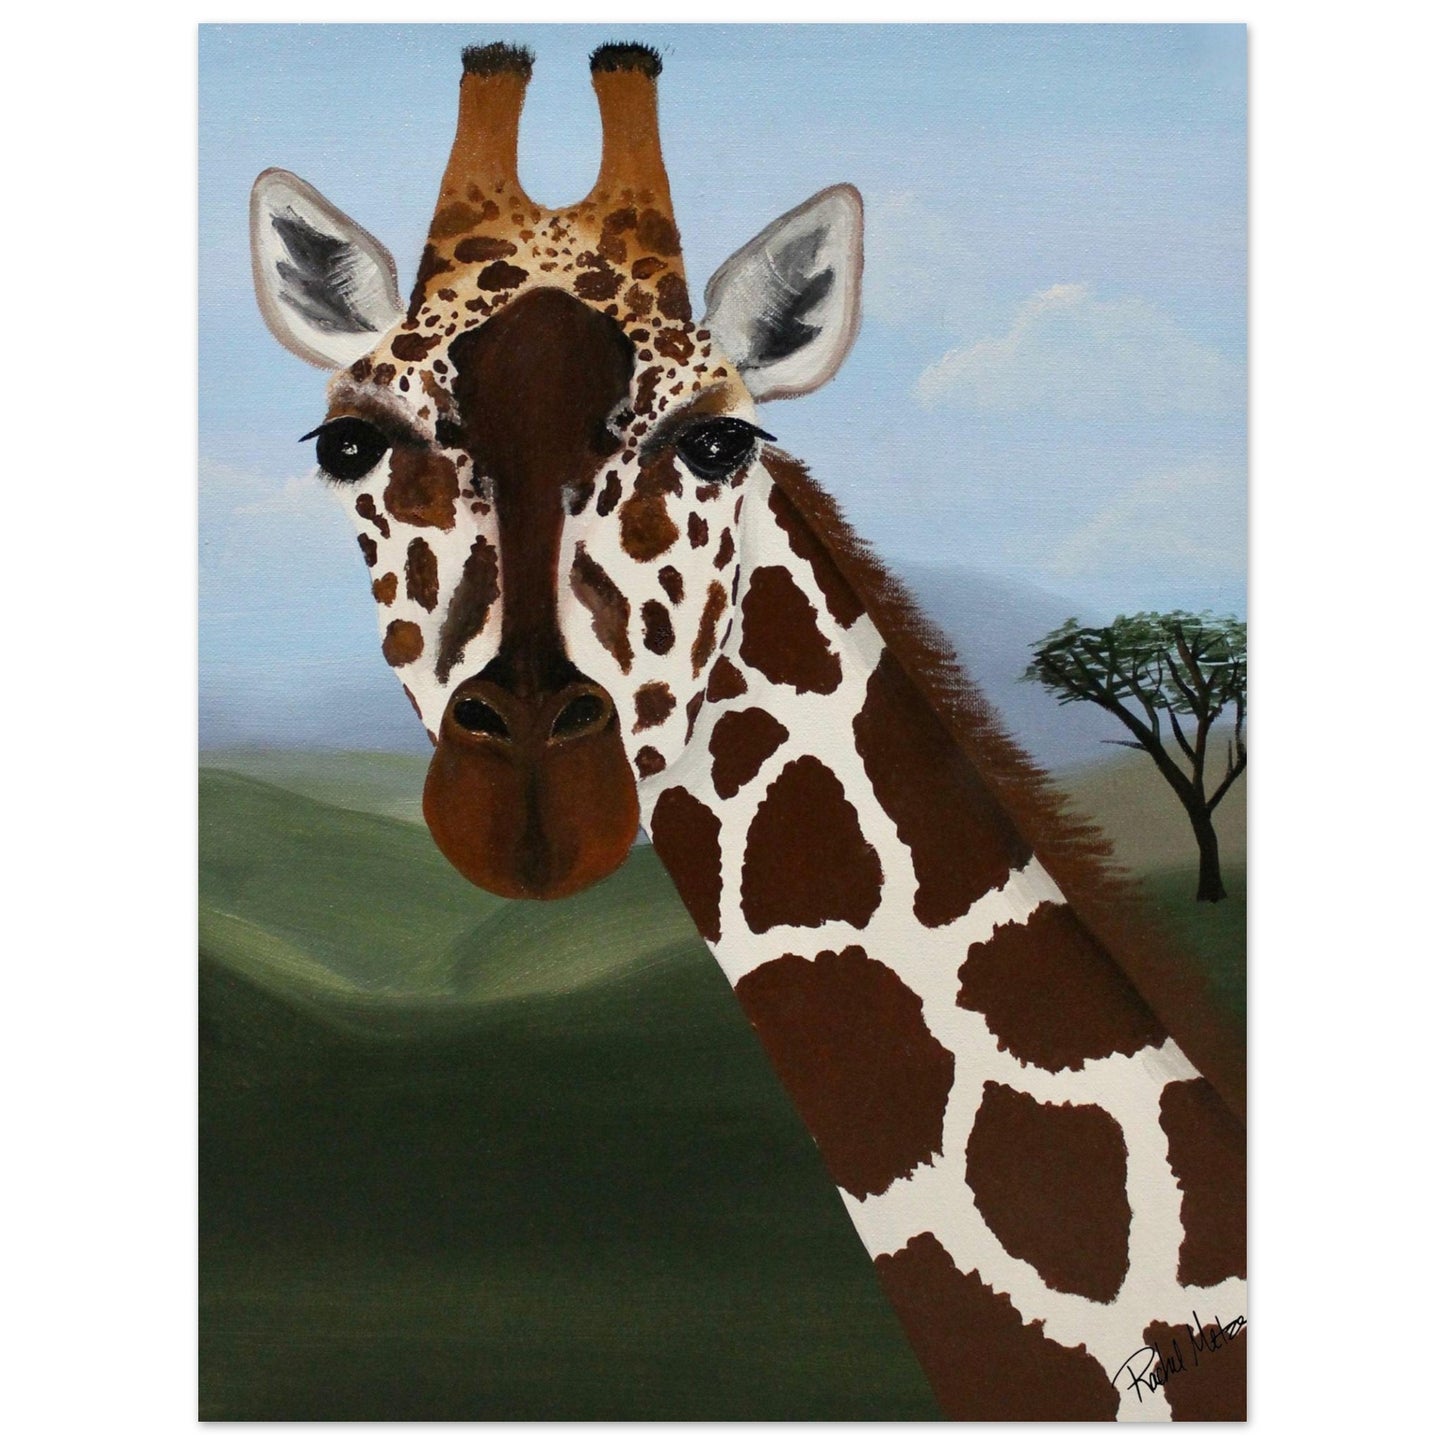 Reticulated Giraffe Wall Art Print on Premium Matte Paper Poster - Multiple Sizes